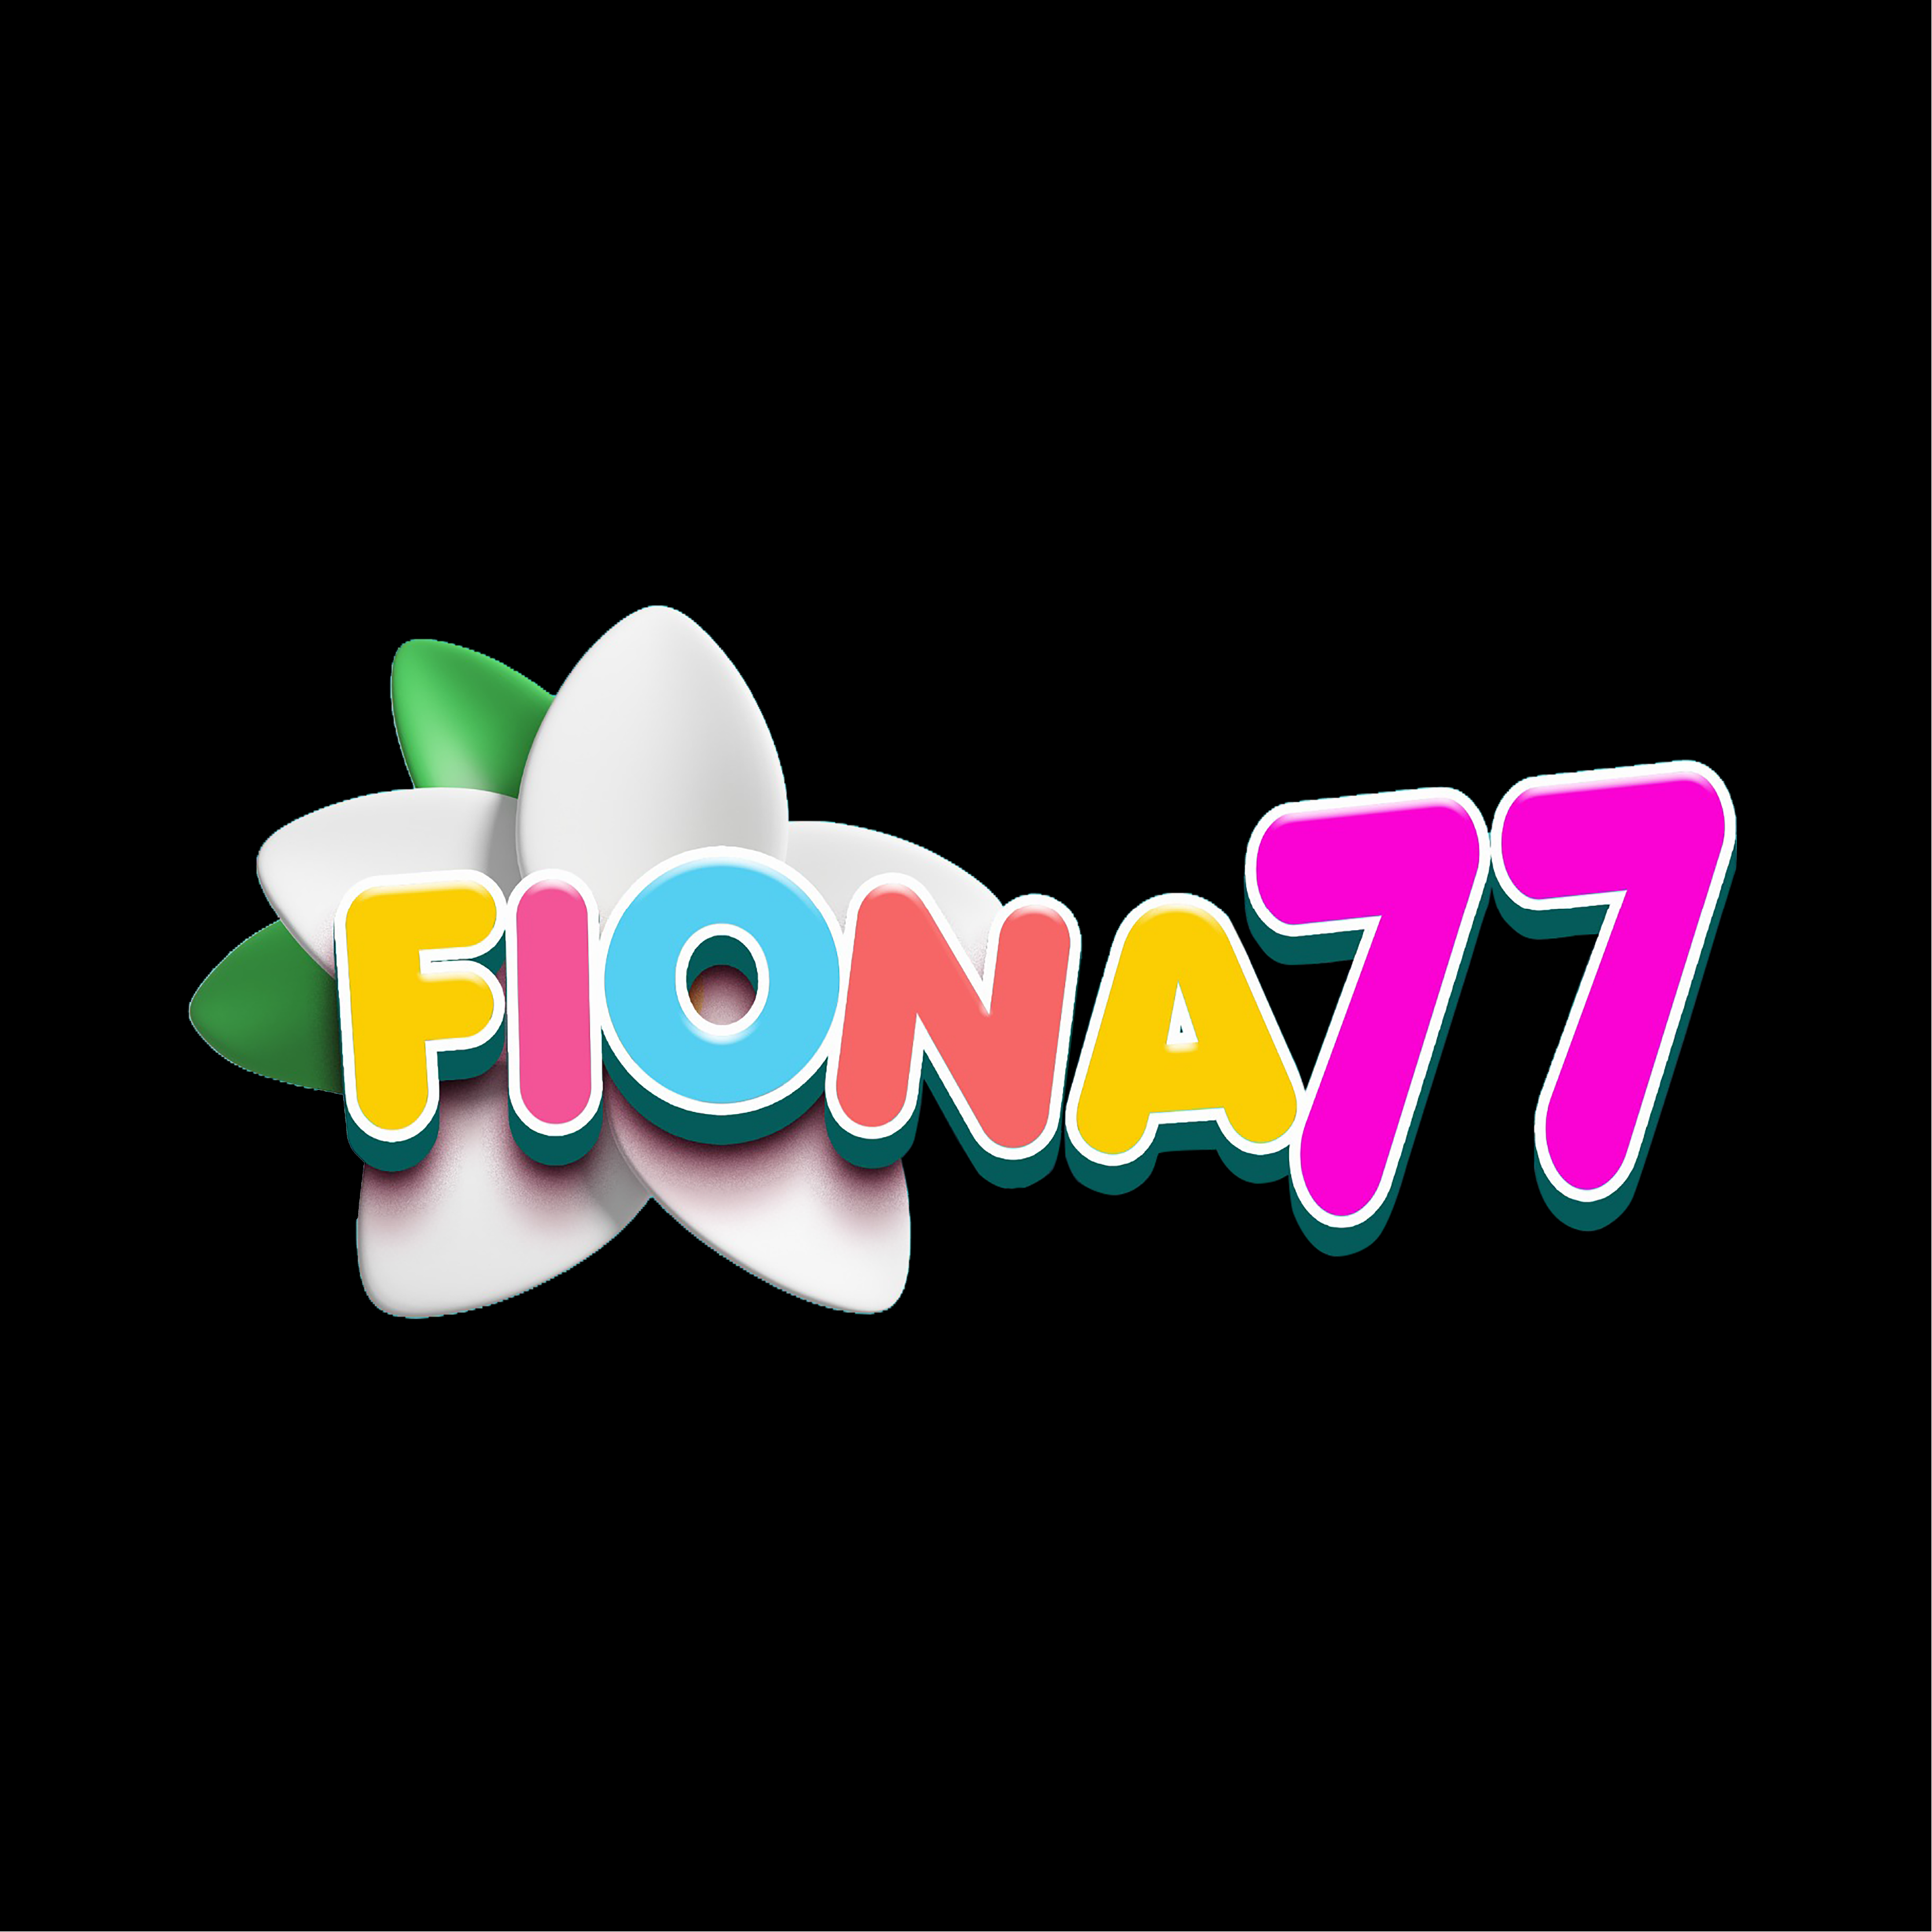 fiona77